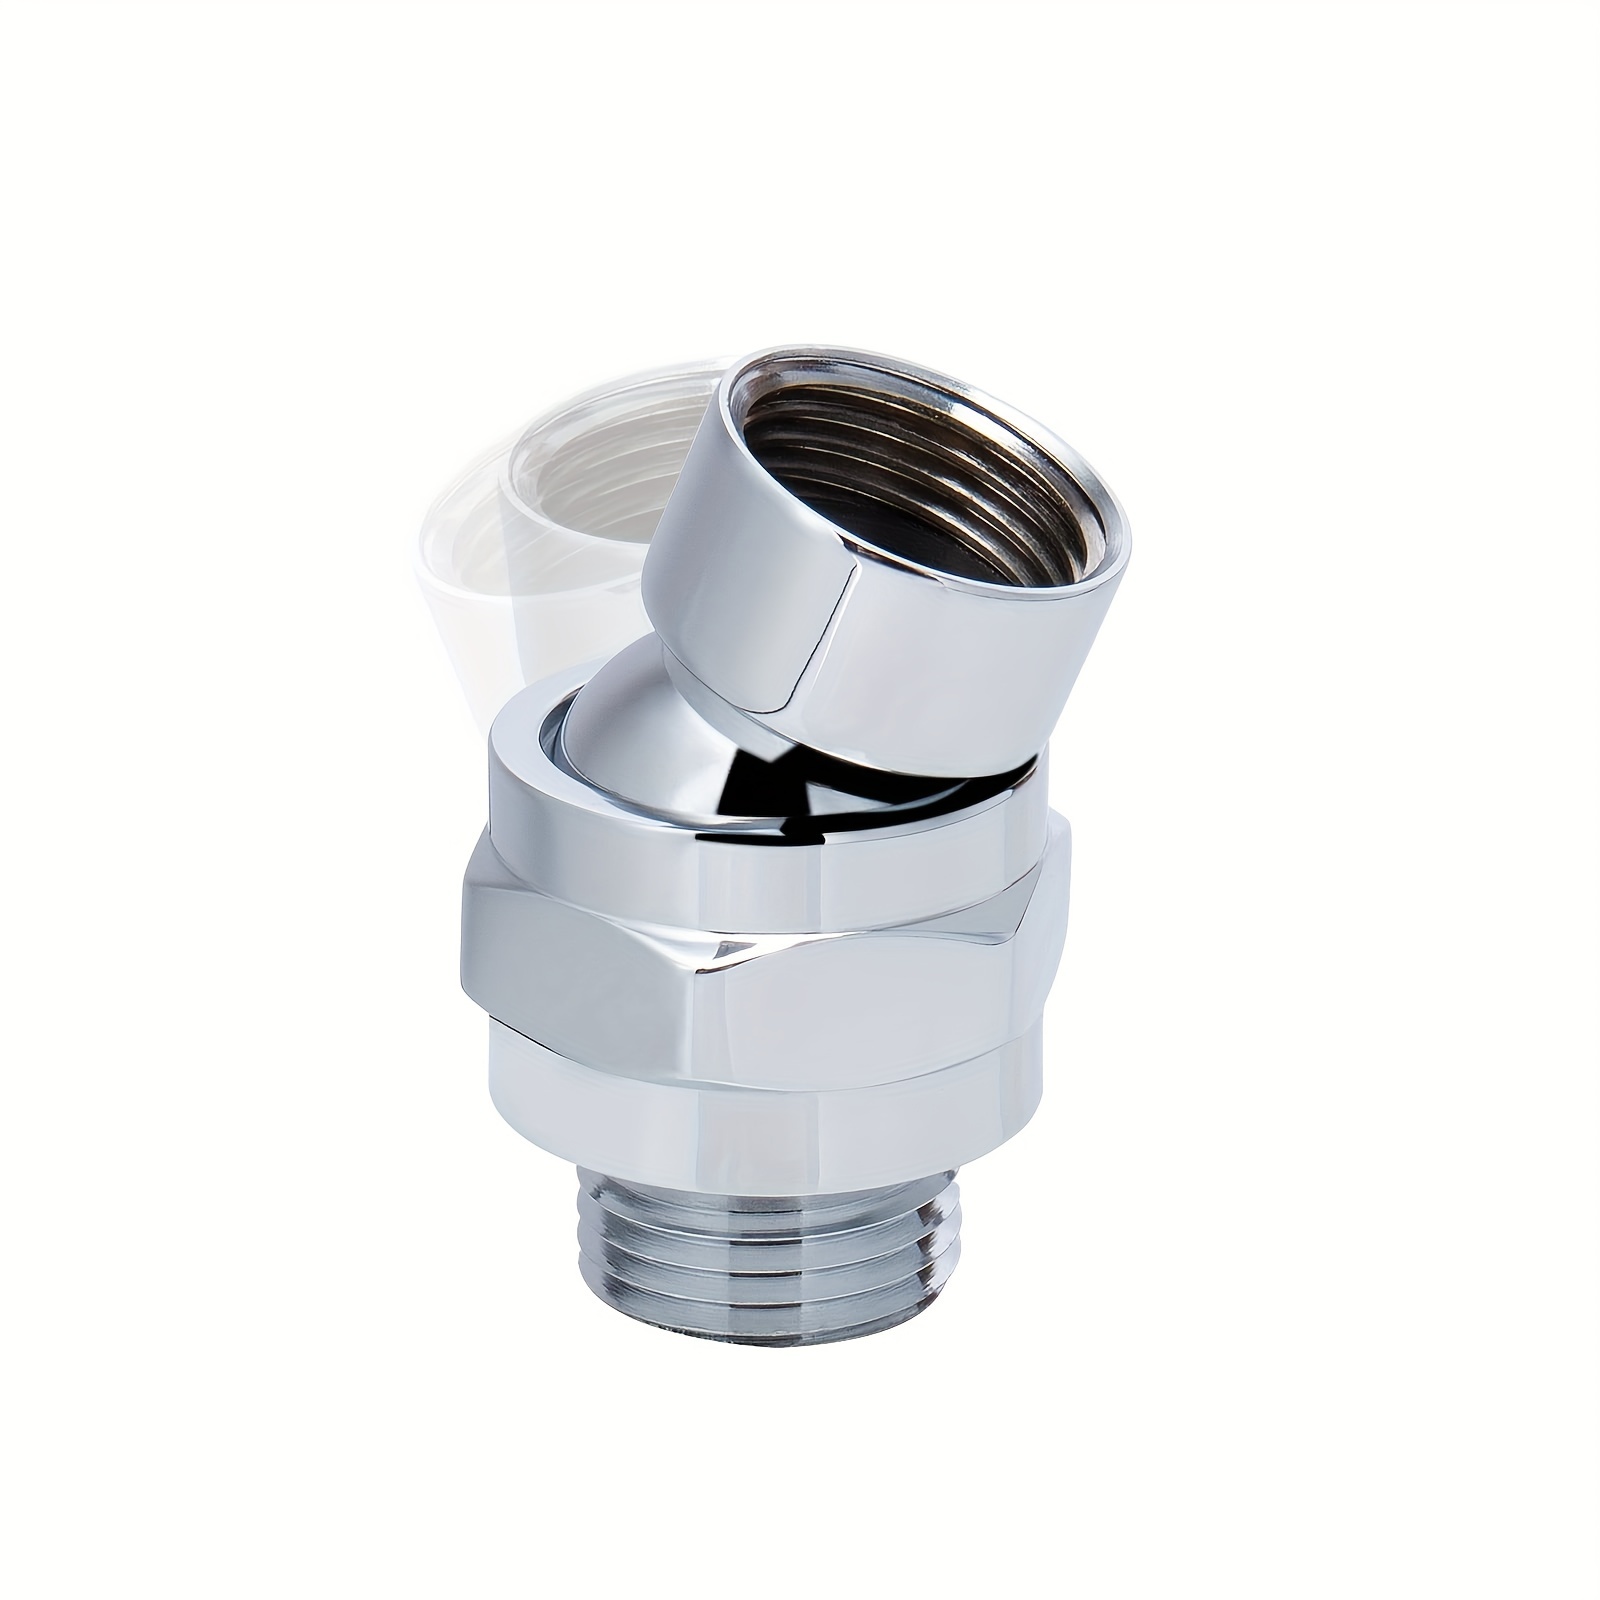 1 Set Shower Connector, Ball Joint Shower Head, Swivel Ball Adapter, Brass  Adjustable Shower Arm Extension, Universal Component